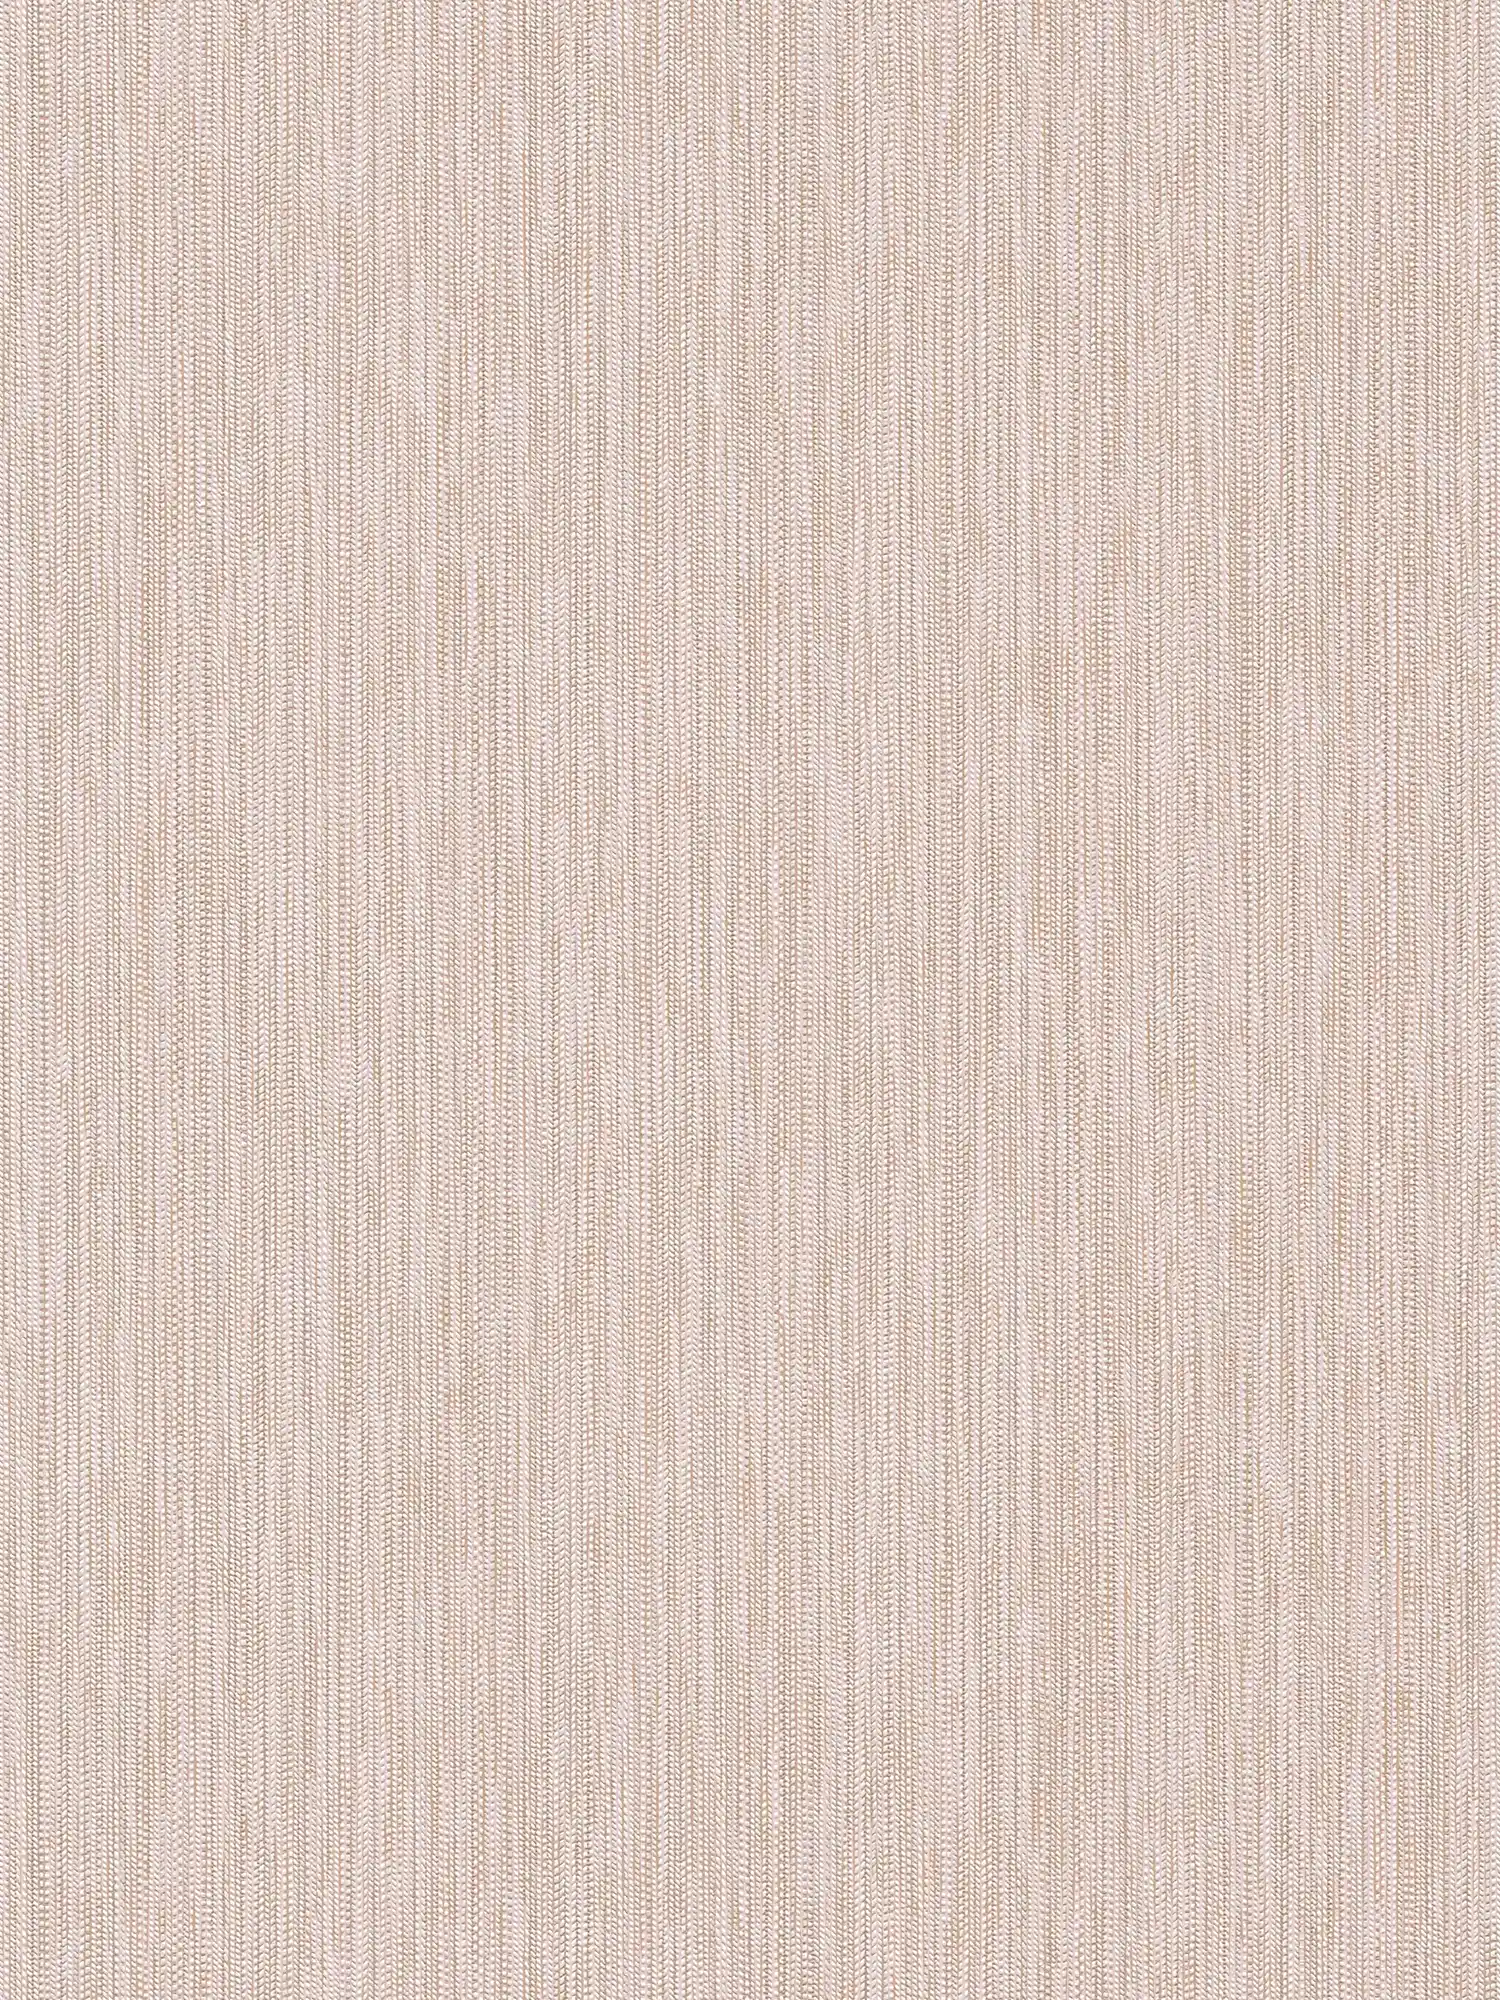 Mehrfarbige Vliestapete mit Zopf-Muster – Rosa, Grau, Braun
